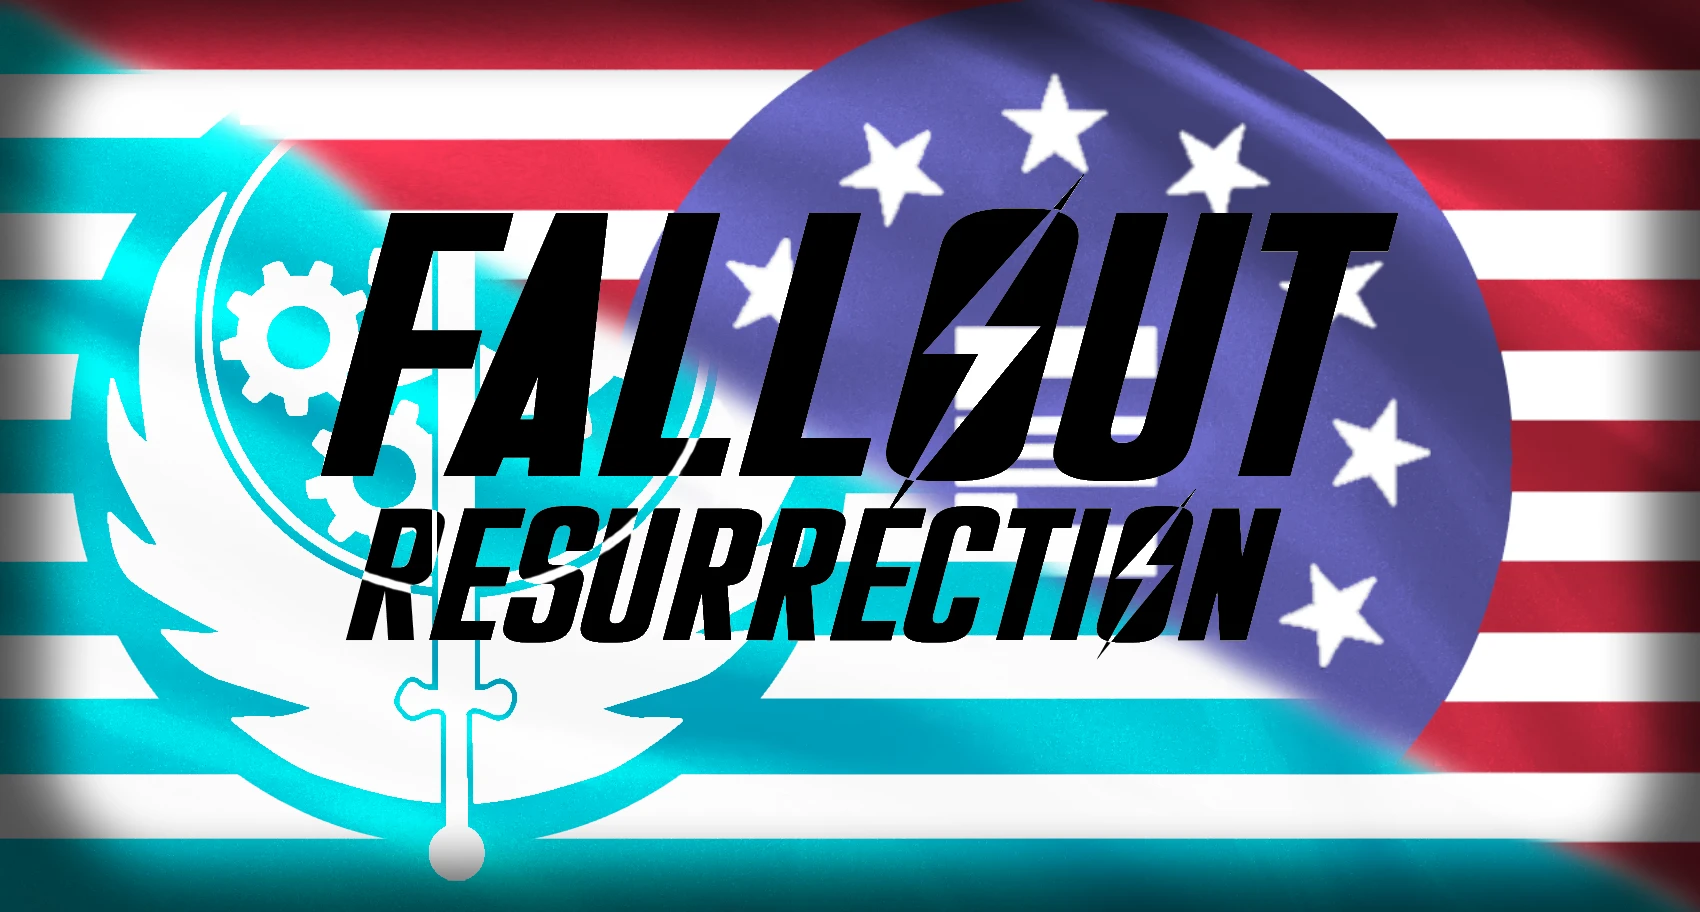 download fallout 1.5 resurrection